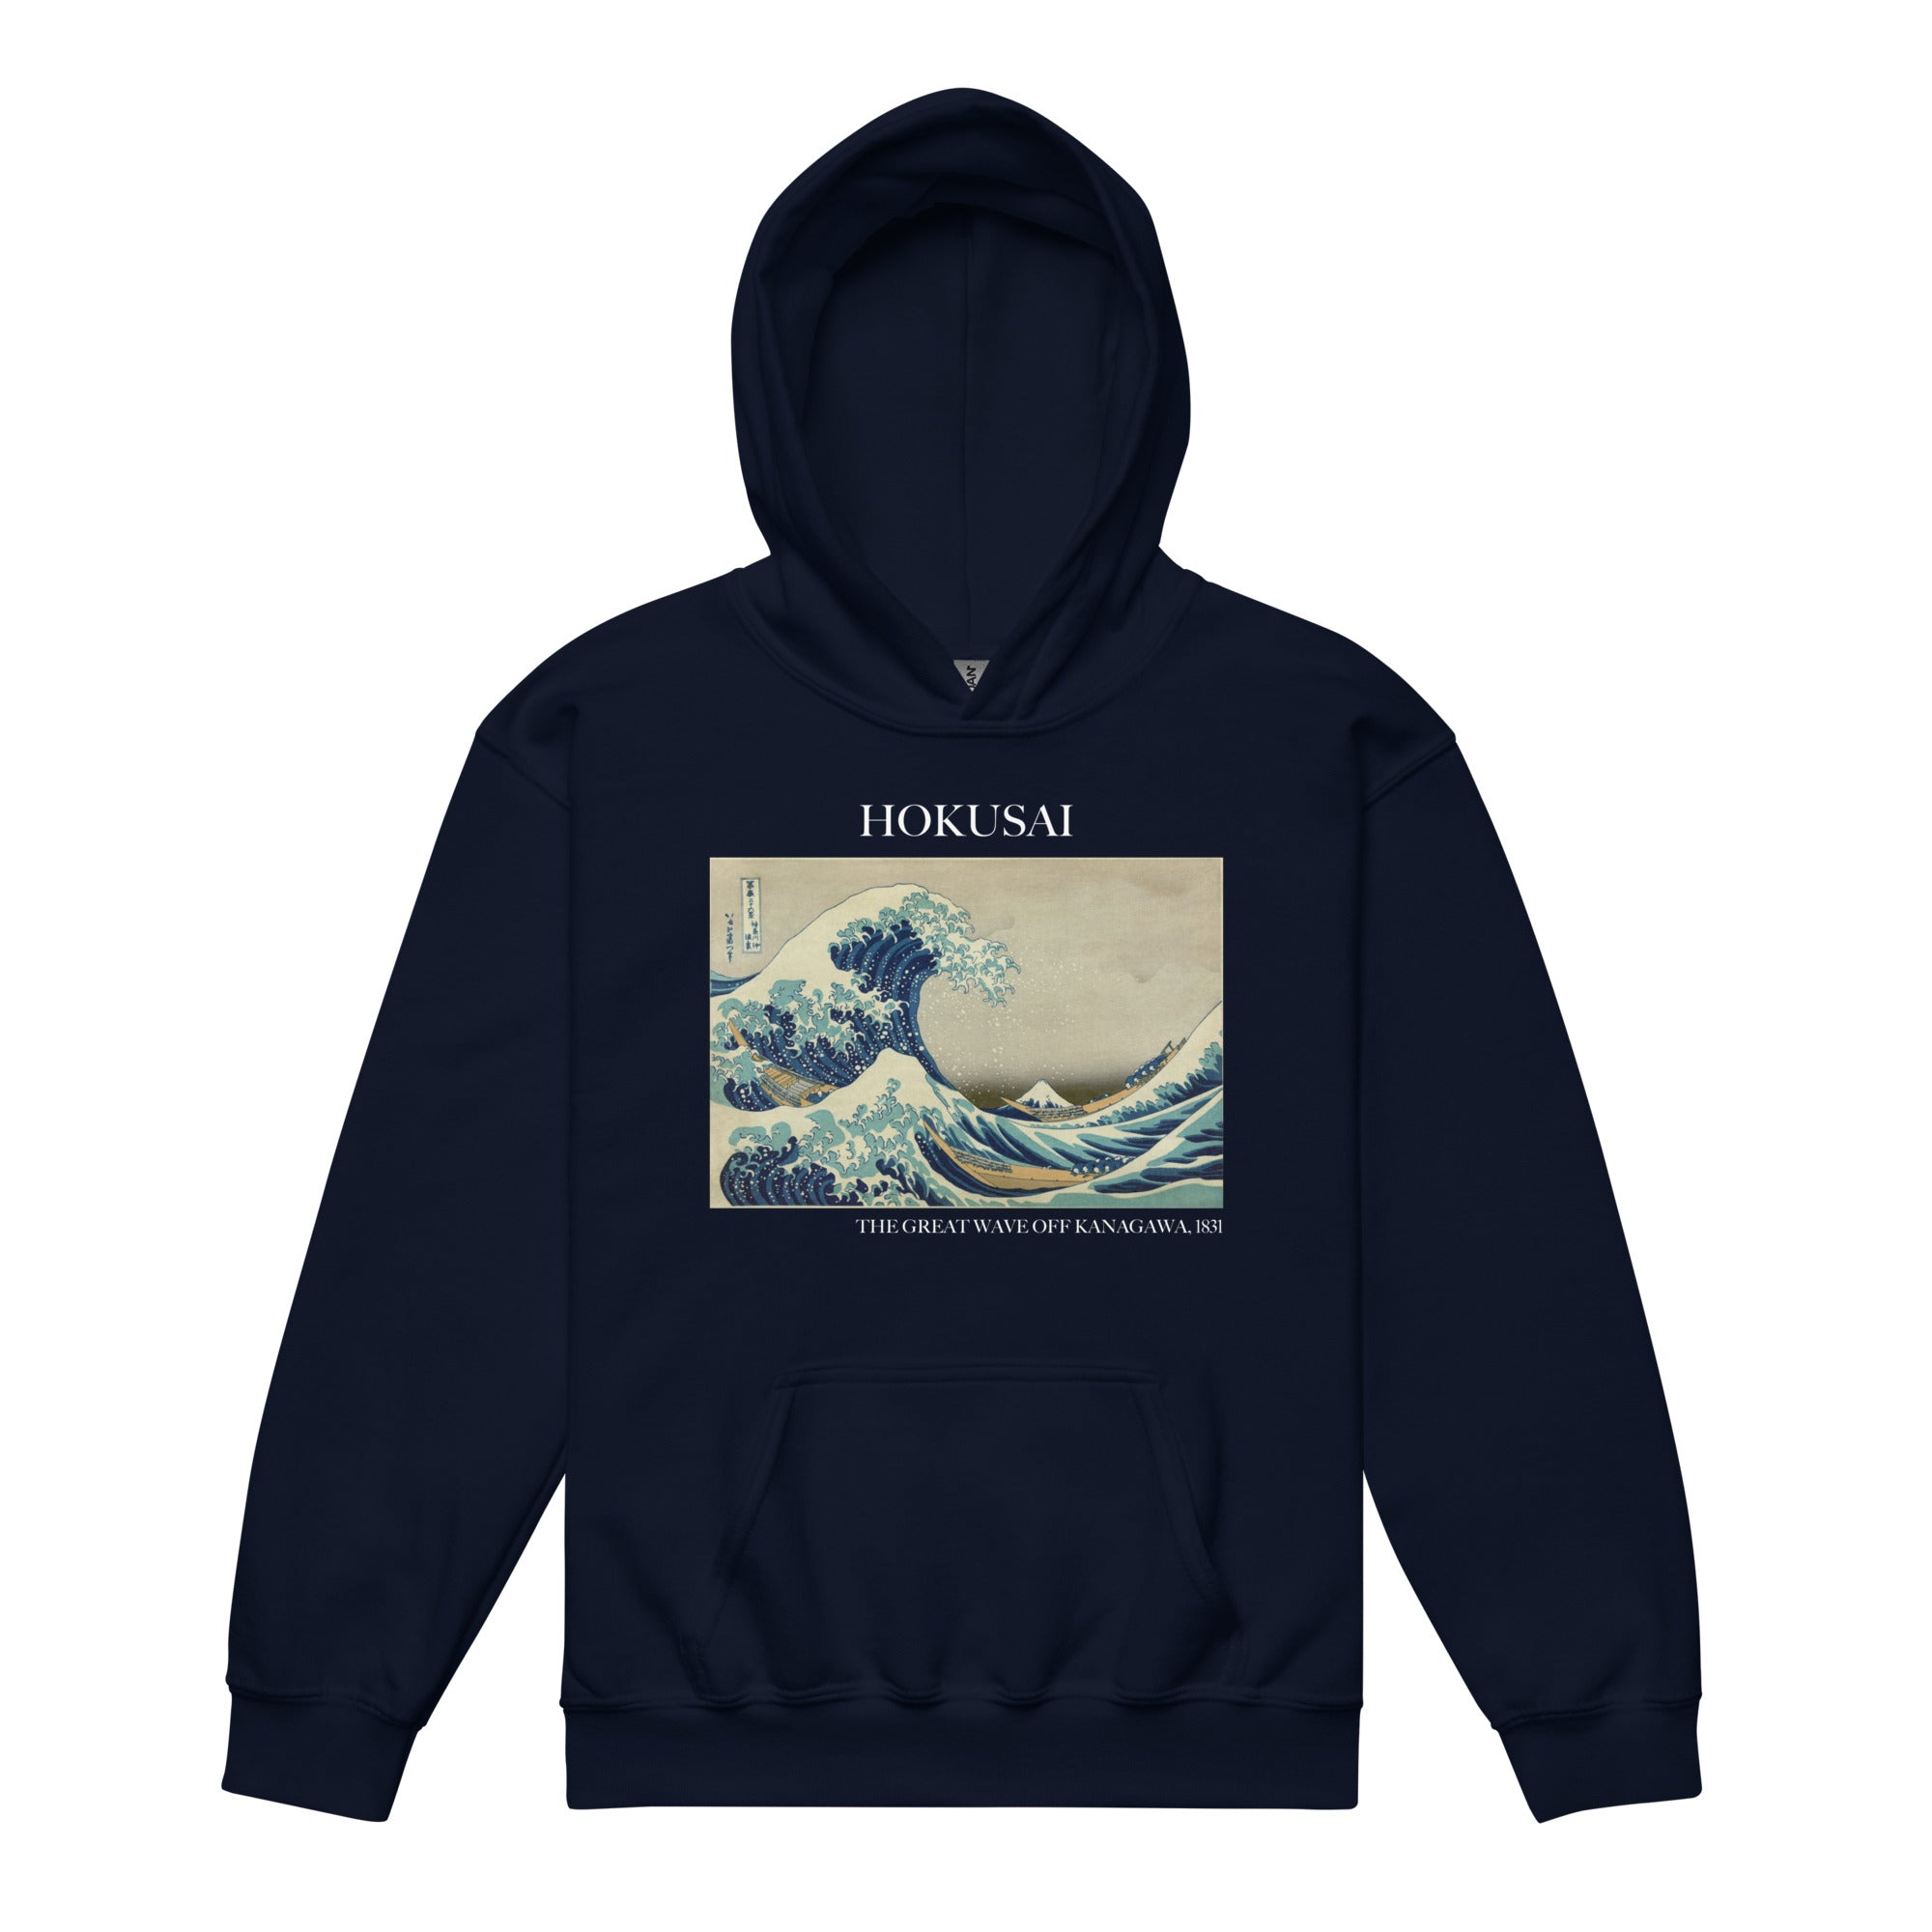 Hokusai 'The Great Wave off Kanagawa' Famous Painting Hoodie | Premium Youth Art Hoodie